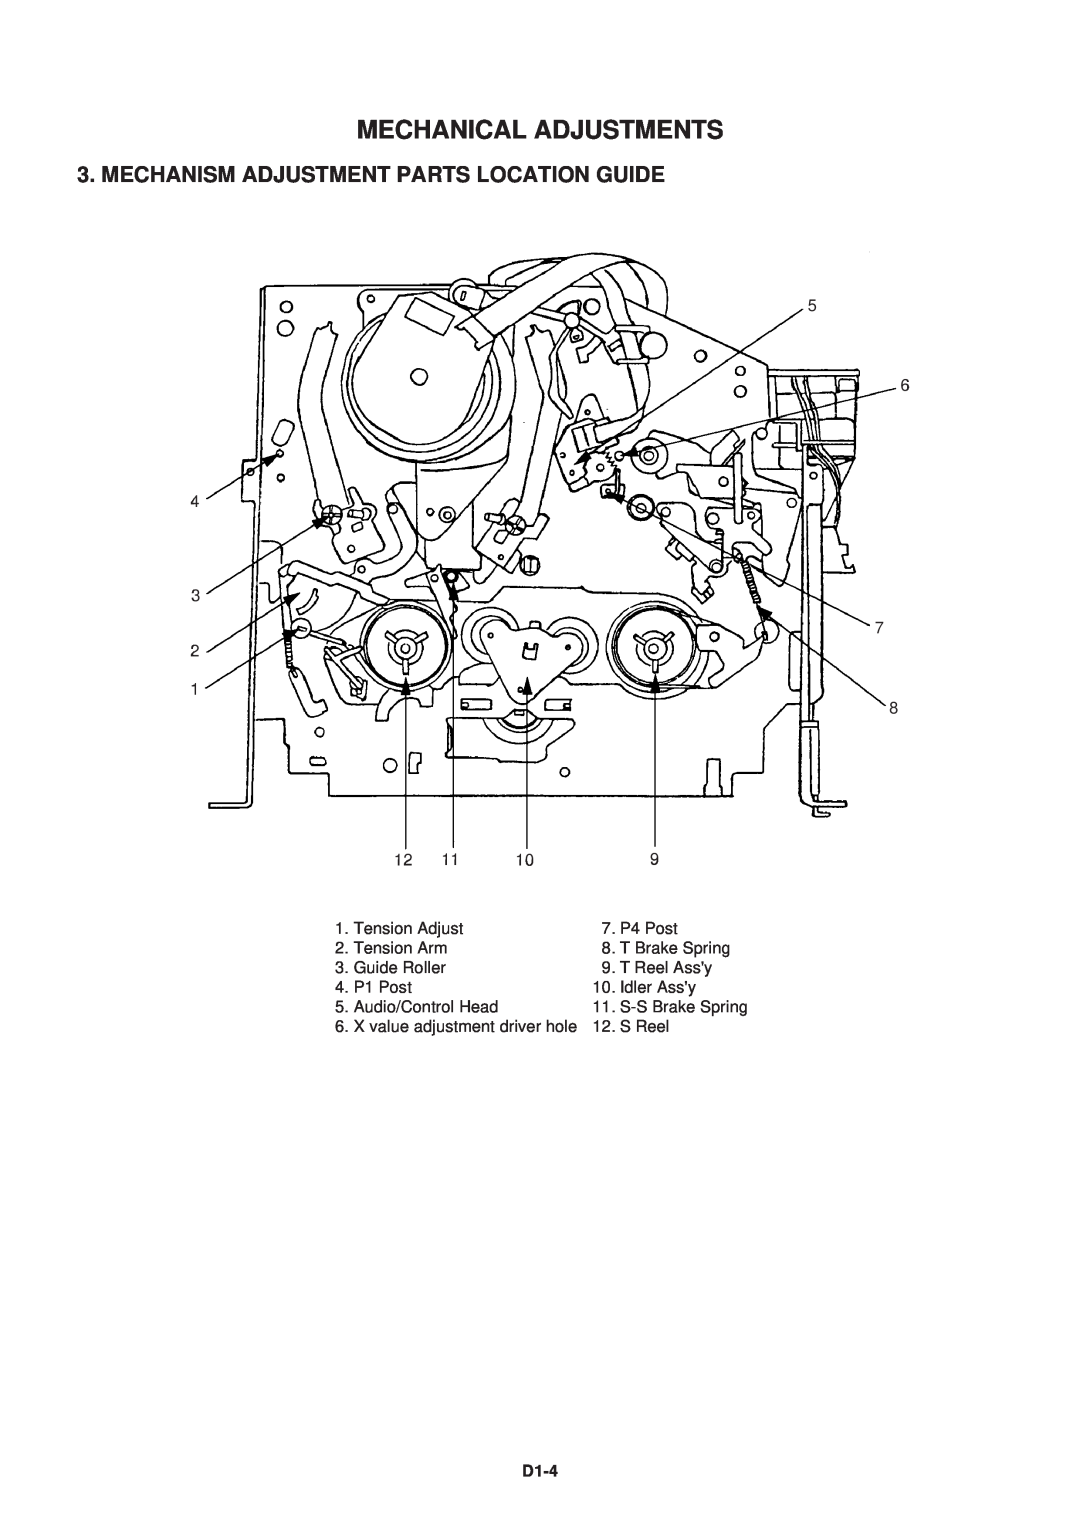 Aiwa HV-FX5100 service manual Mechanism Adjustment Parts Location Guide, Mechanical Adjustments, D1-4 